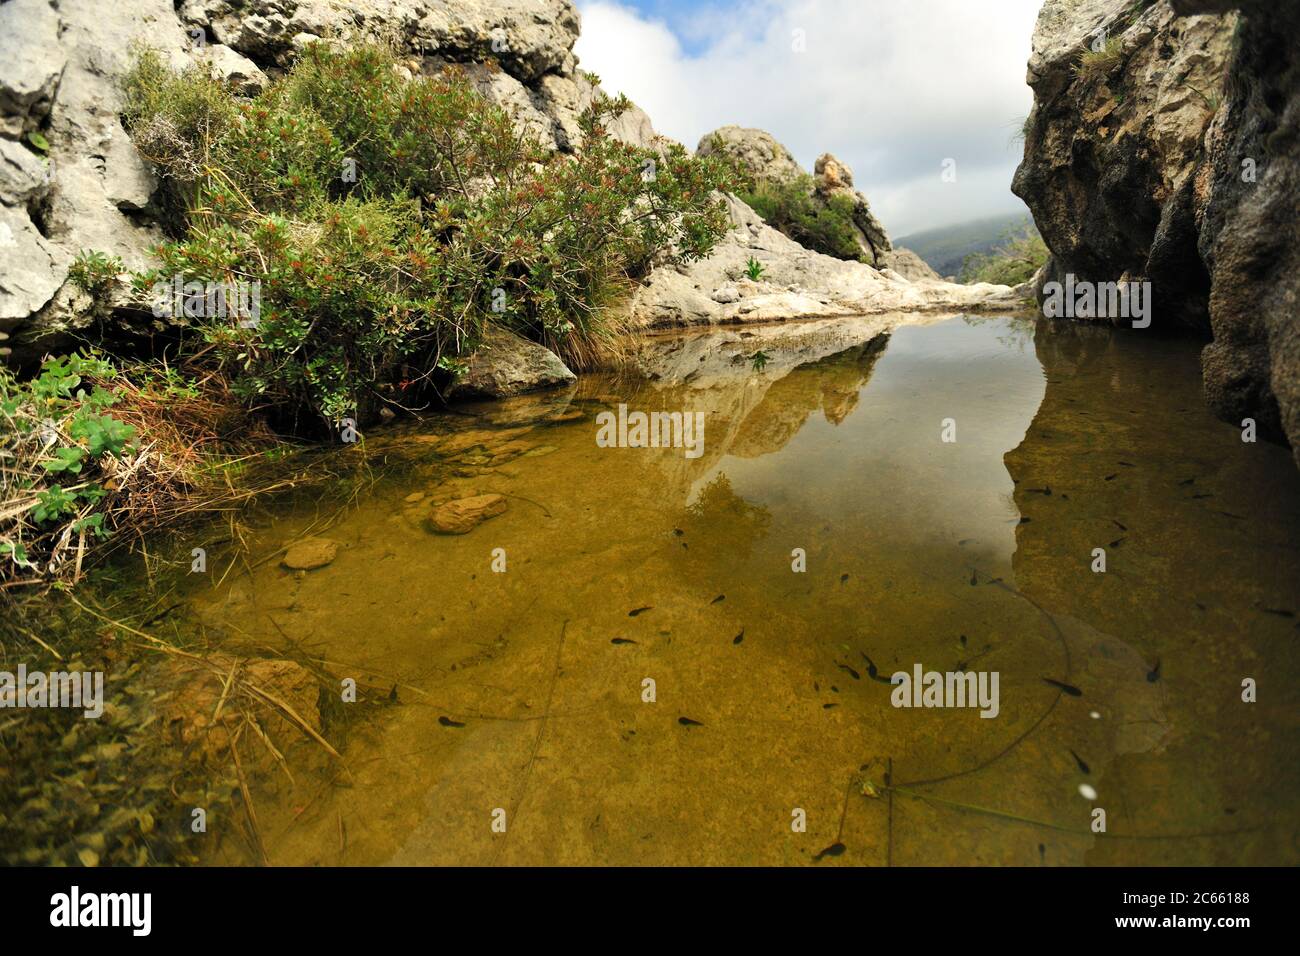 Este estanque es el hábitat del sapo de partera mallorquín (Alytes muletensis) Torrent de s'Esmorcador, Mallorca, España. El sapo de partera mallorquina (Alytes muletensis) es endémico del terreno rocoso de arenisca de la Serra de Tramuntana en el noroeste de Mallorca. Foto de stock